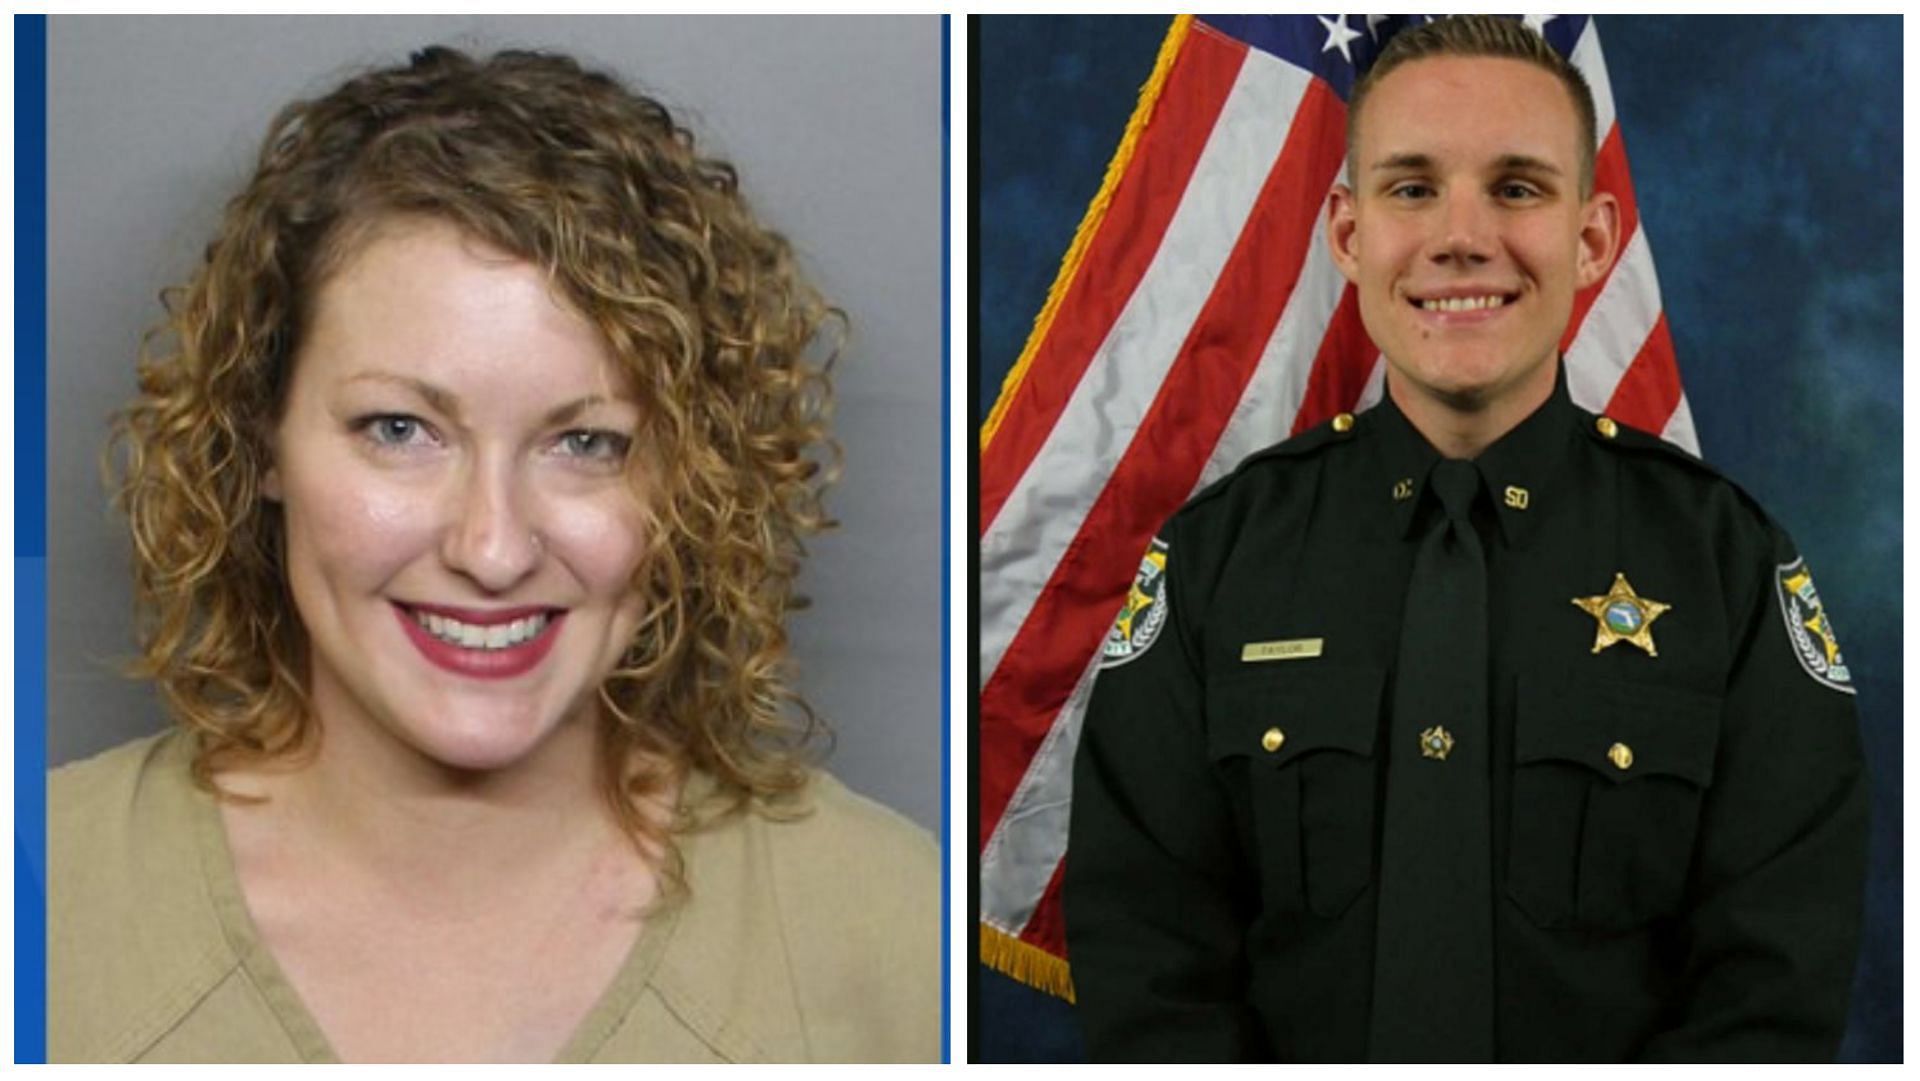 Cassandra Smith (left), Deputy Christopher Taylor (right), (images via @Belinda_Post/Twitter)